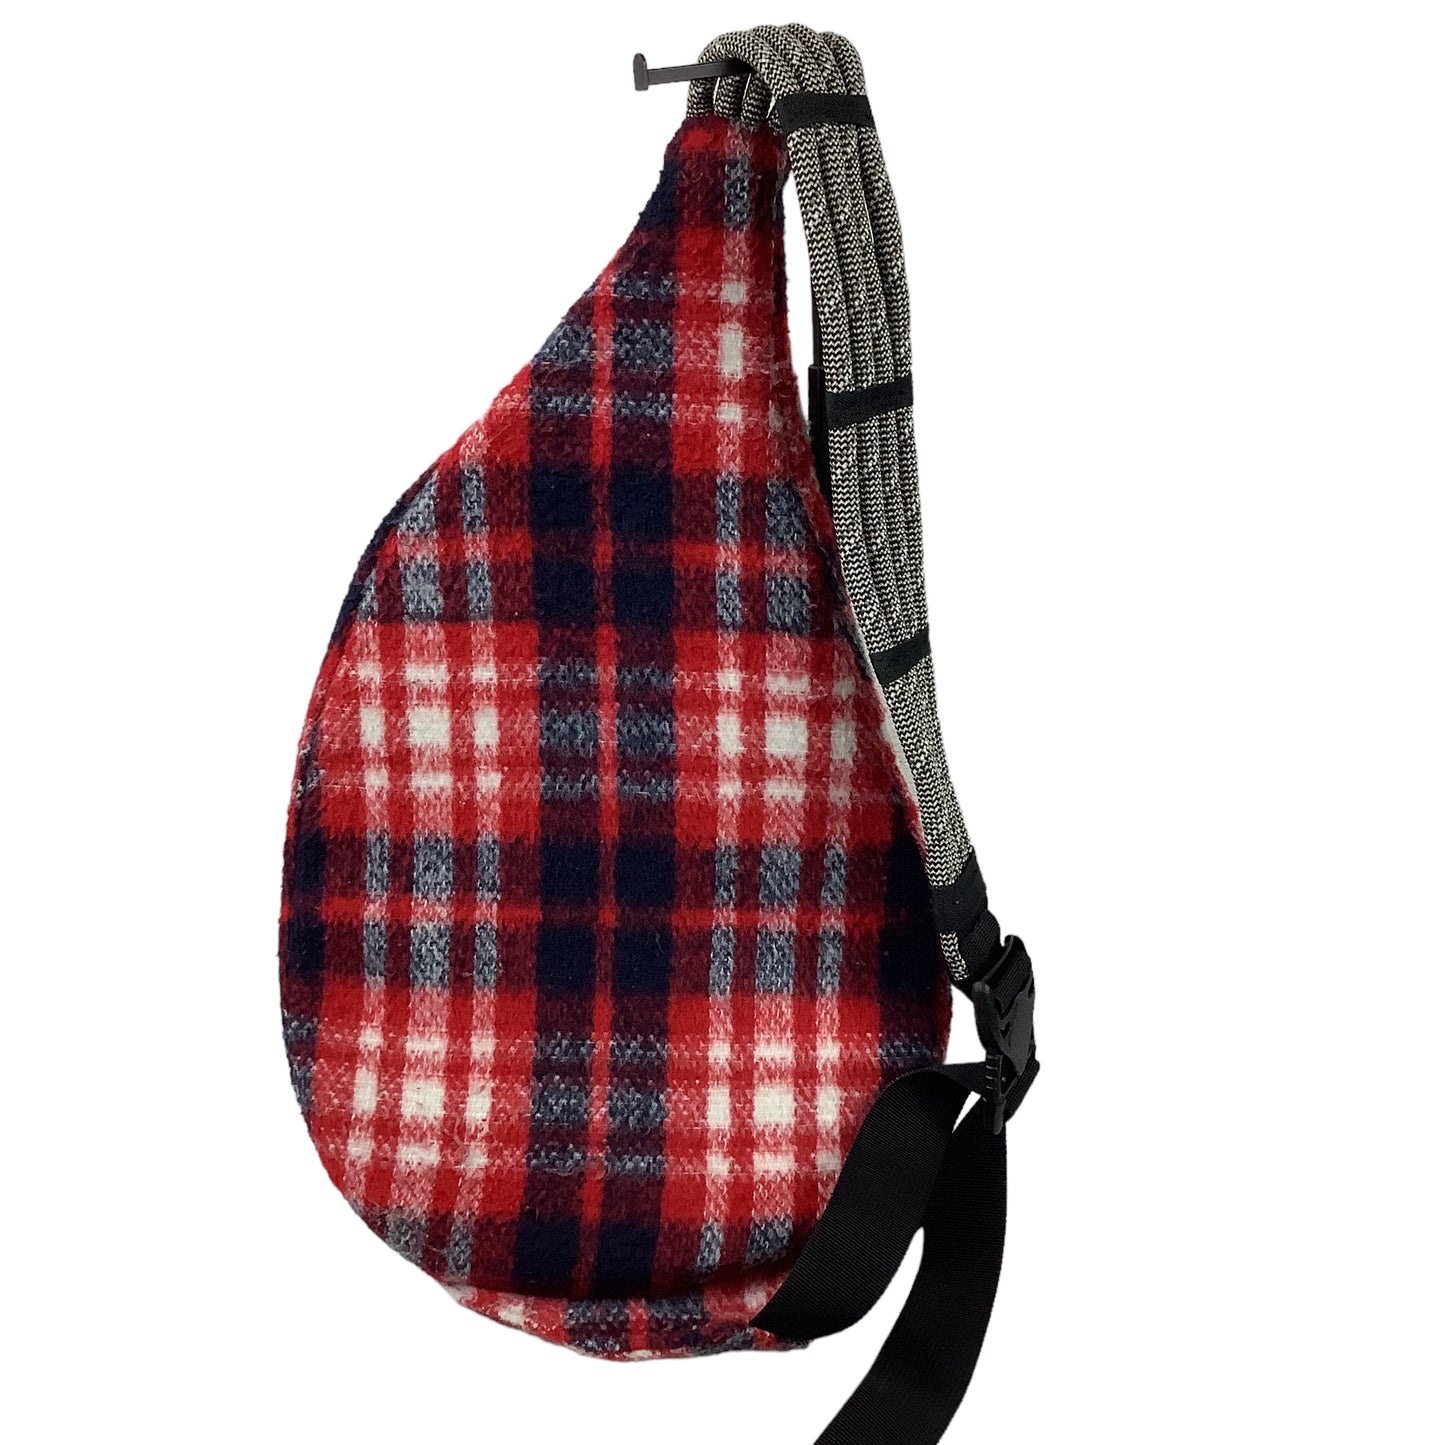 Backpack By Kavu  Size: Large